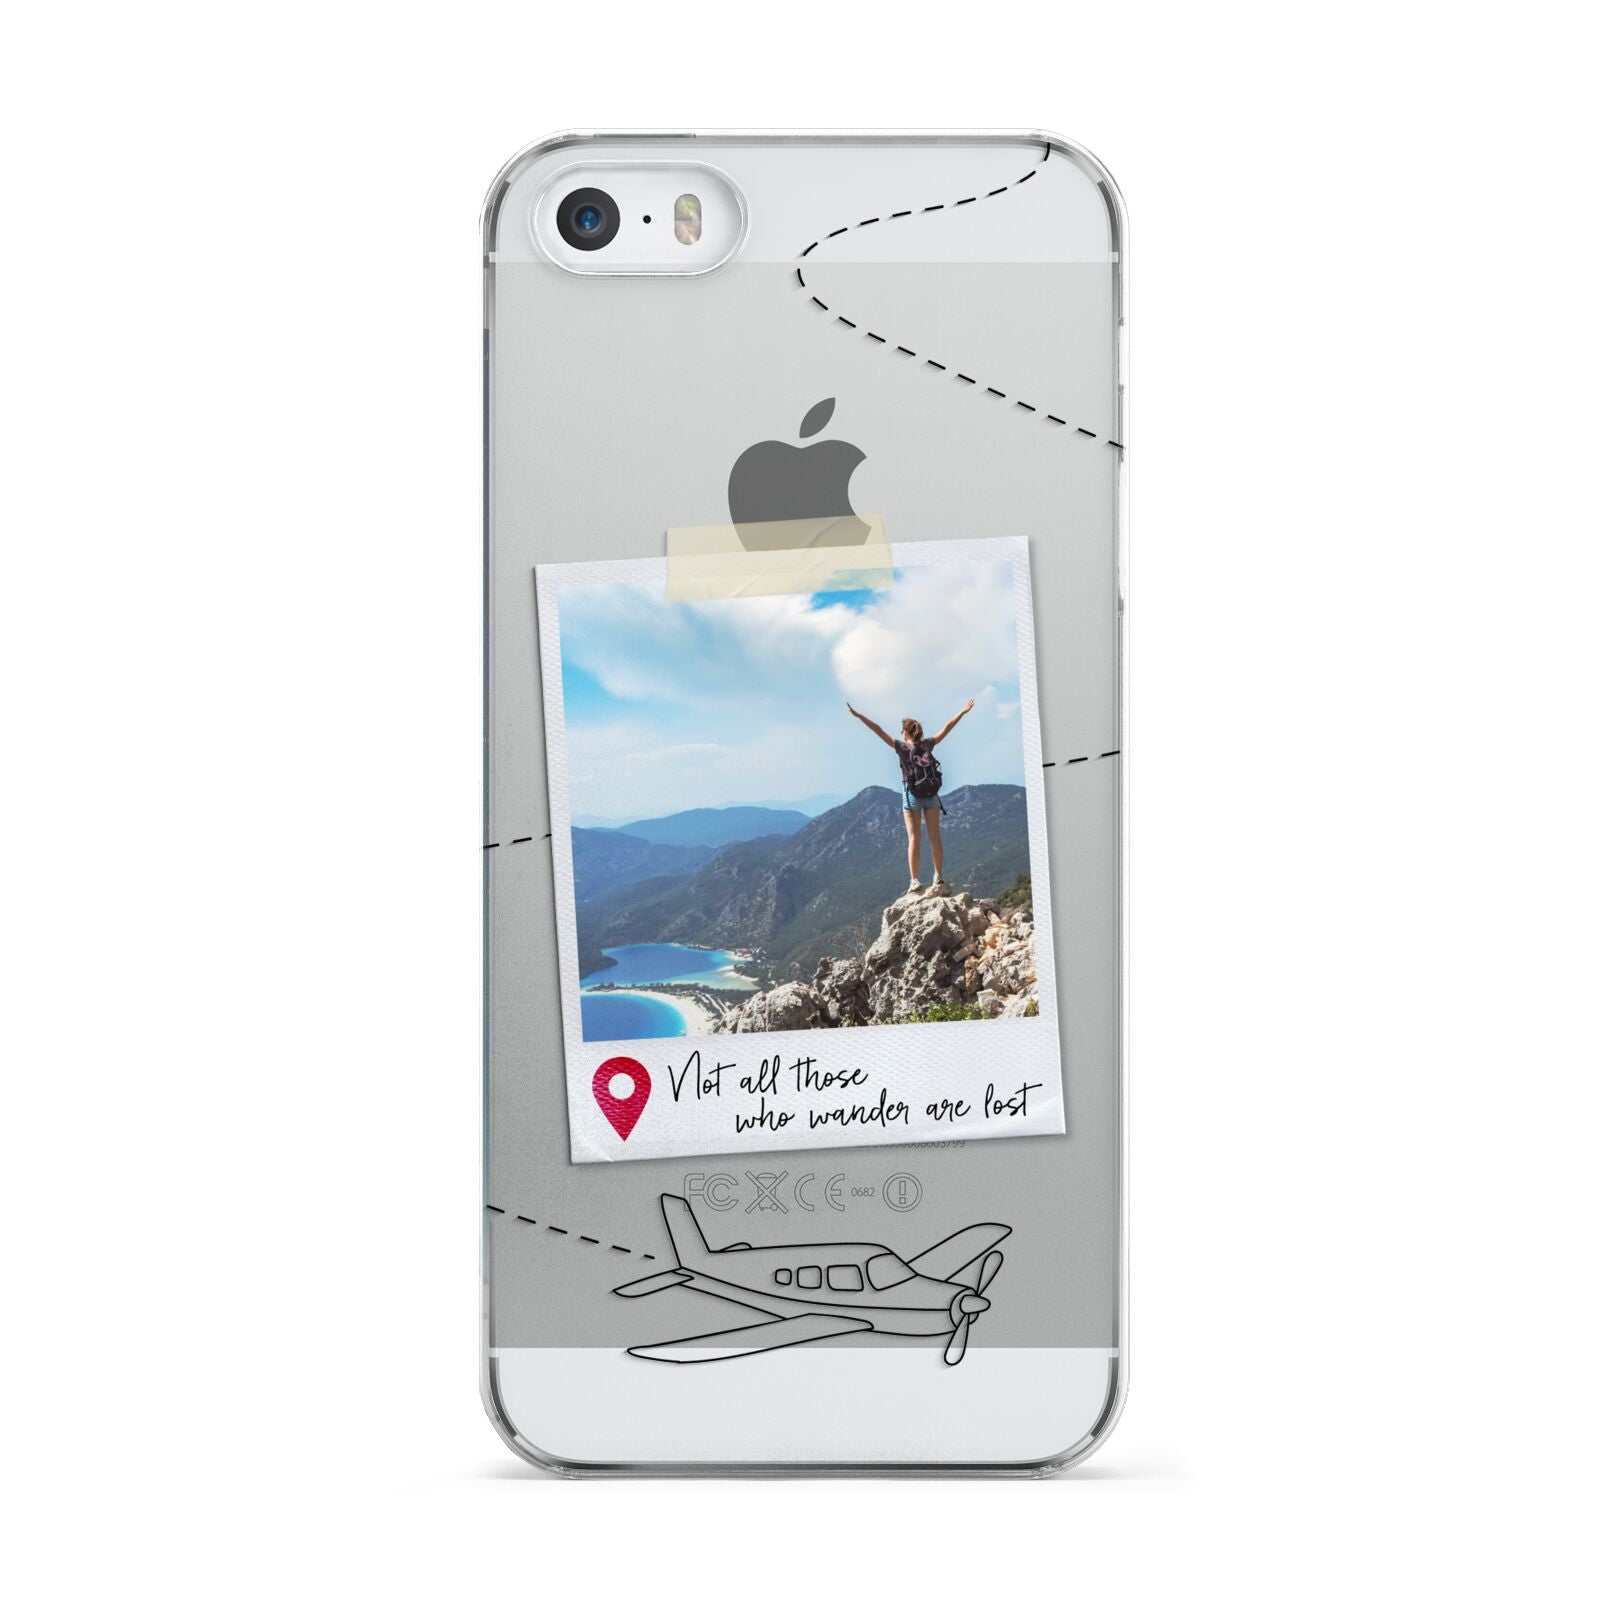 Backpacker Photo Upload Personalised Apple iPhone 5 Case